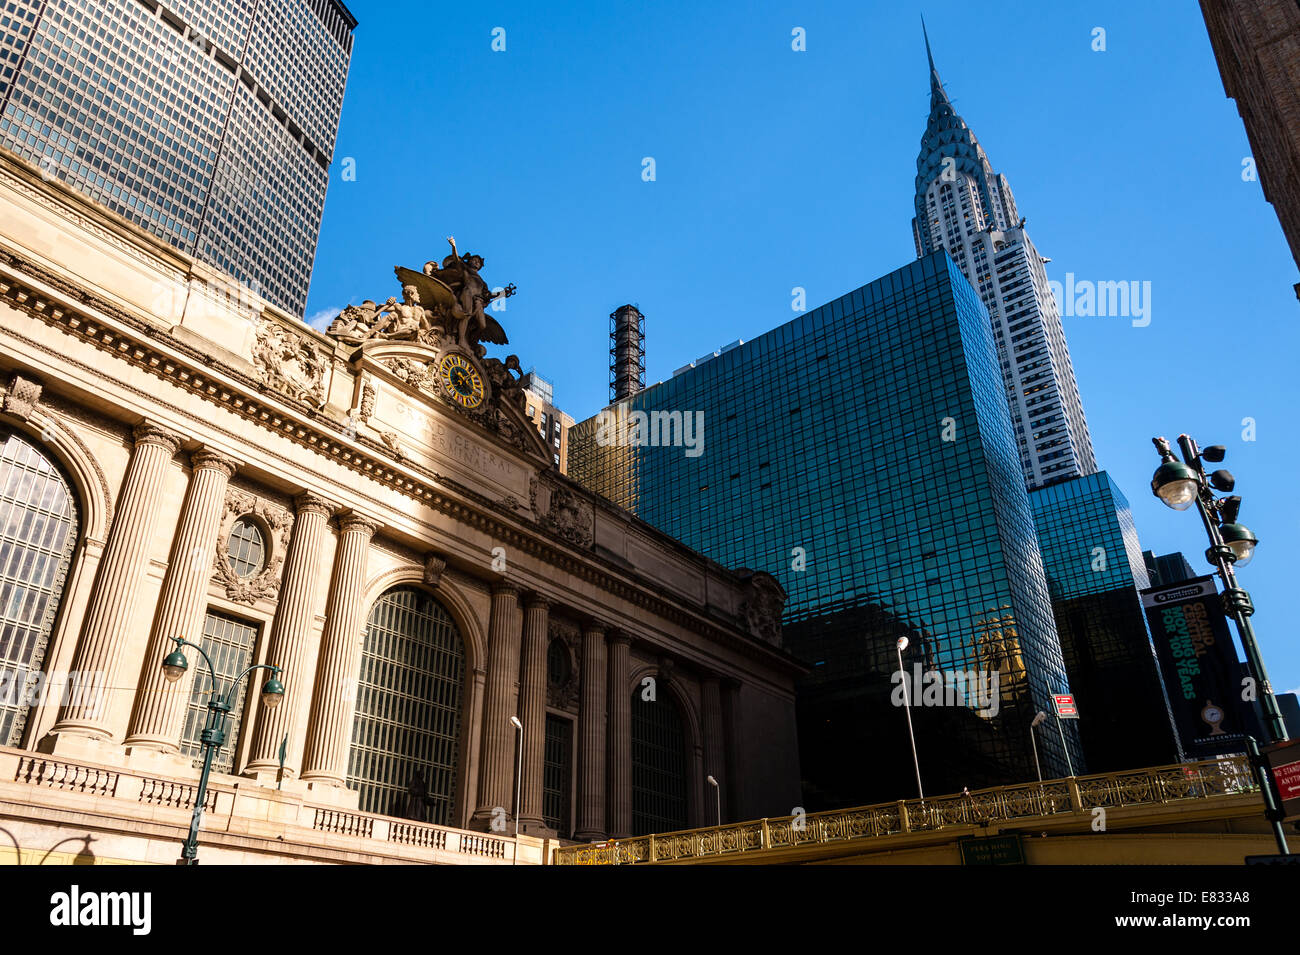 Noi, New York City. La Grand Central Station, Chrysler Building in background. Foto Stock